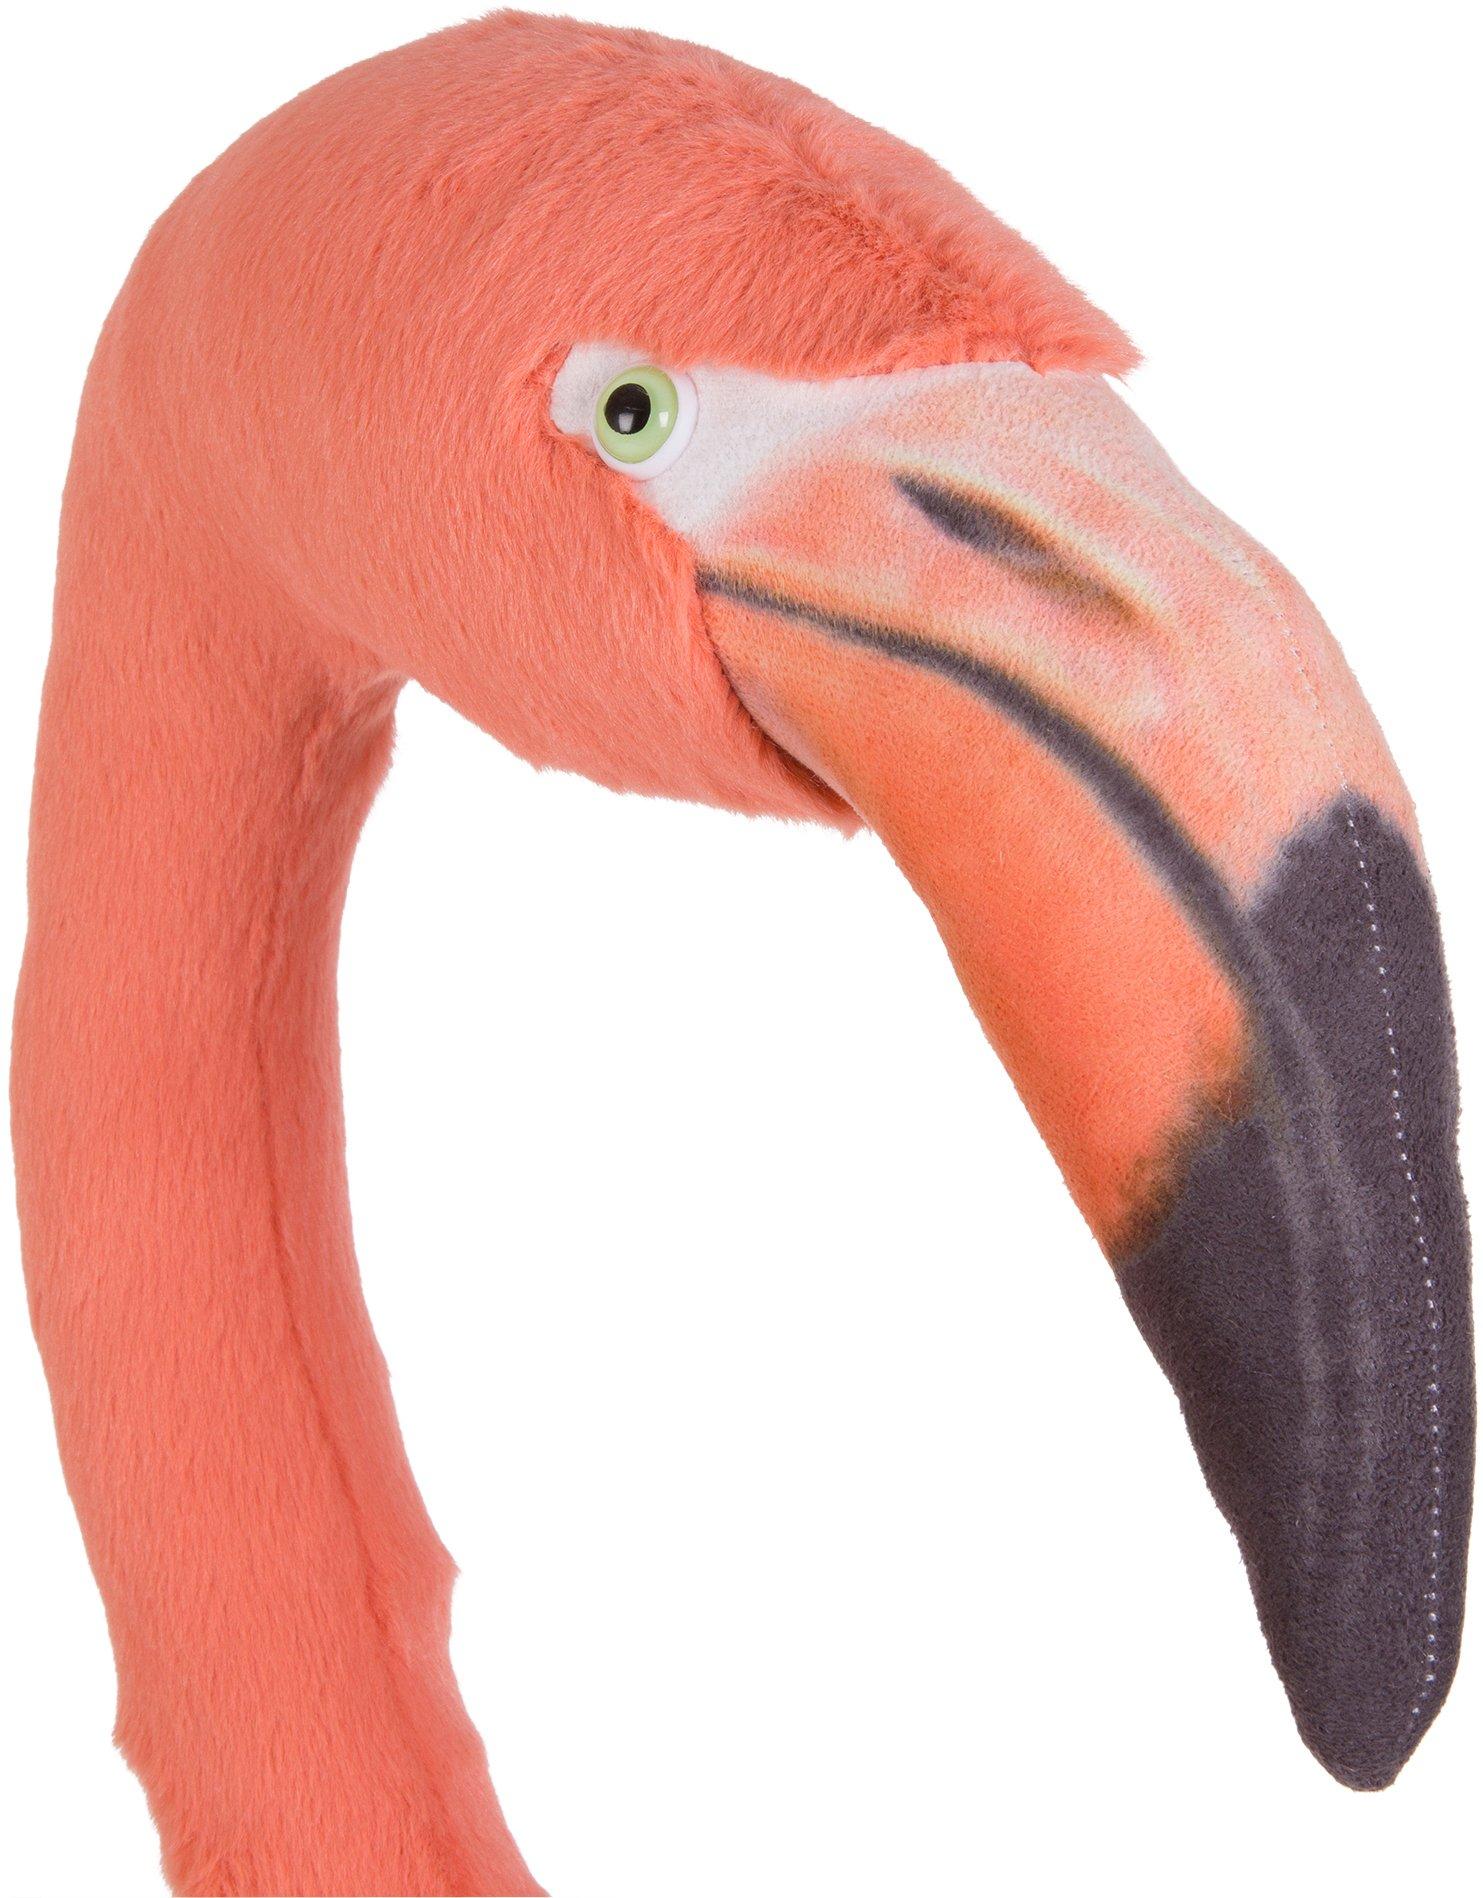 melissa & doug flamingo plush